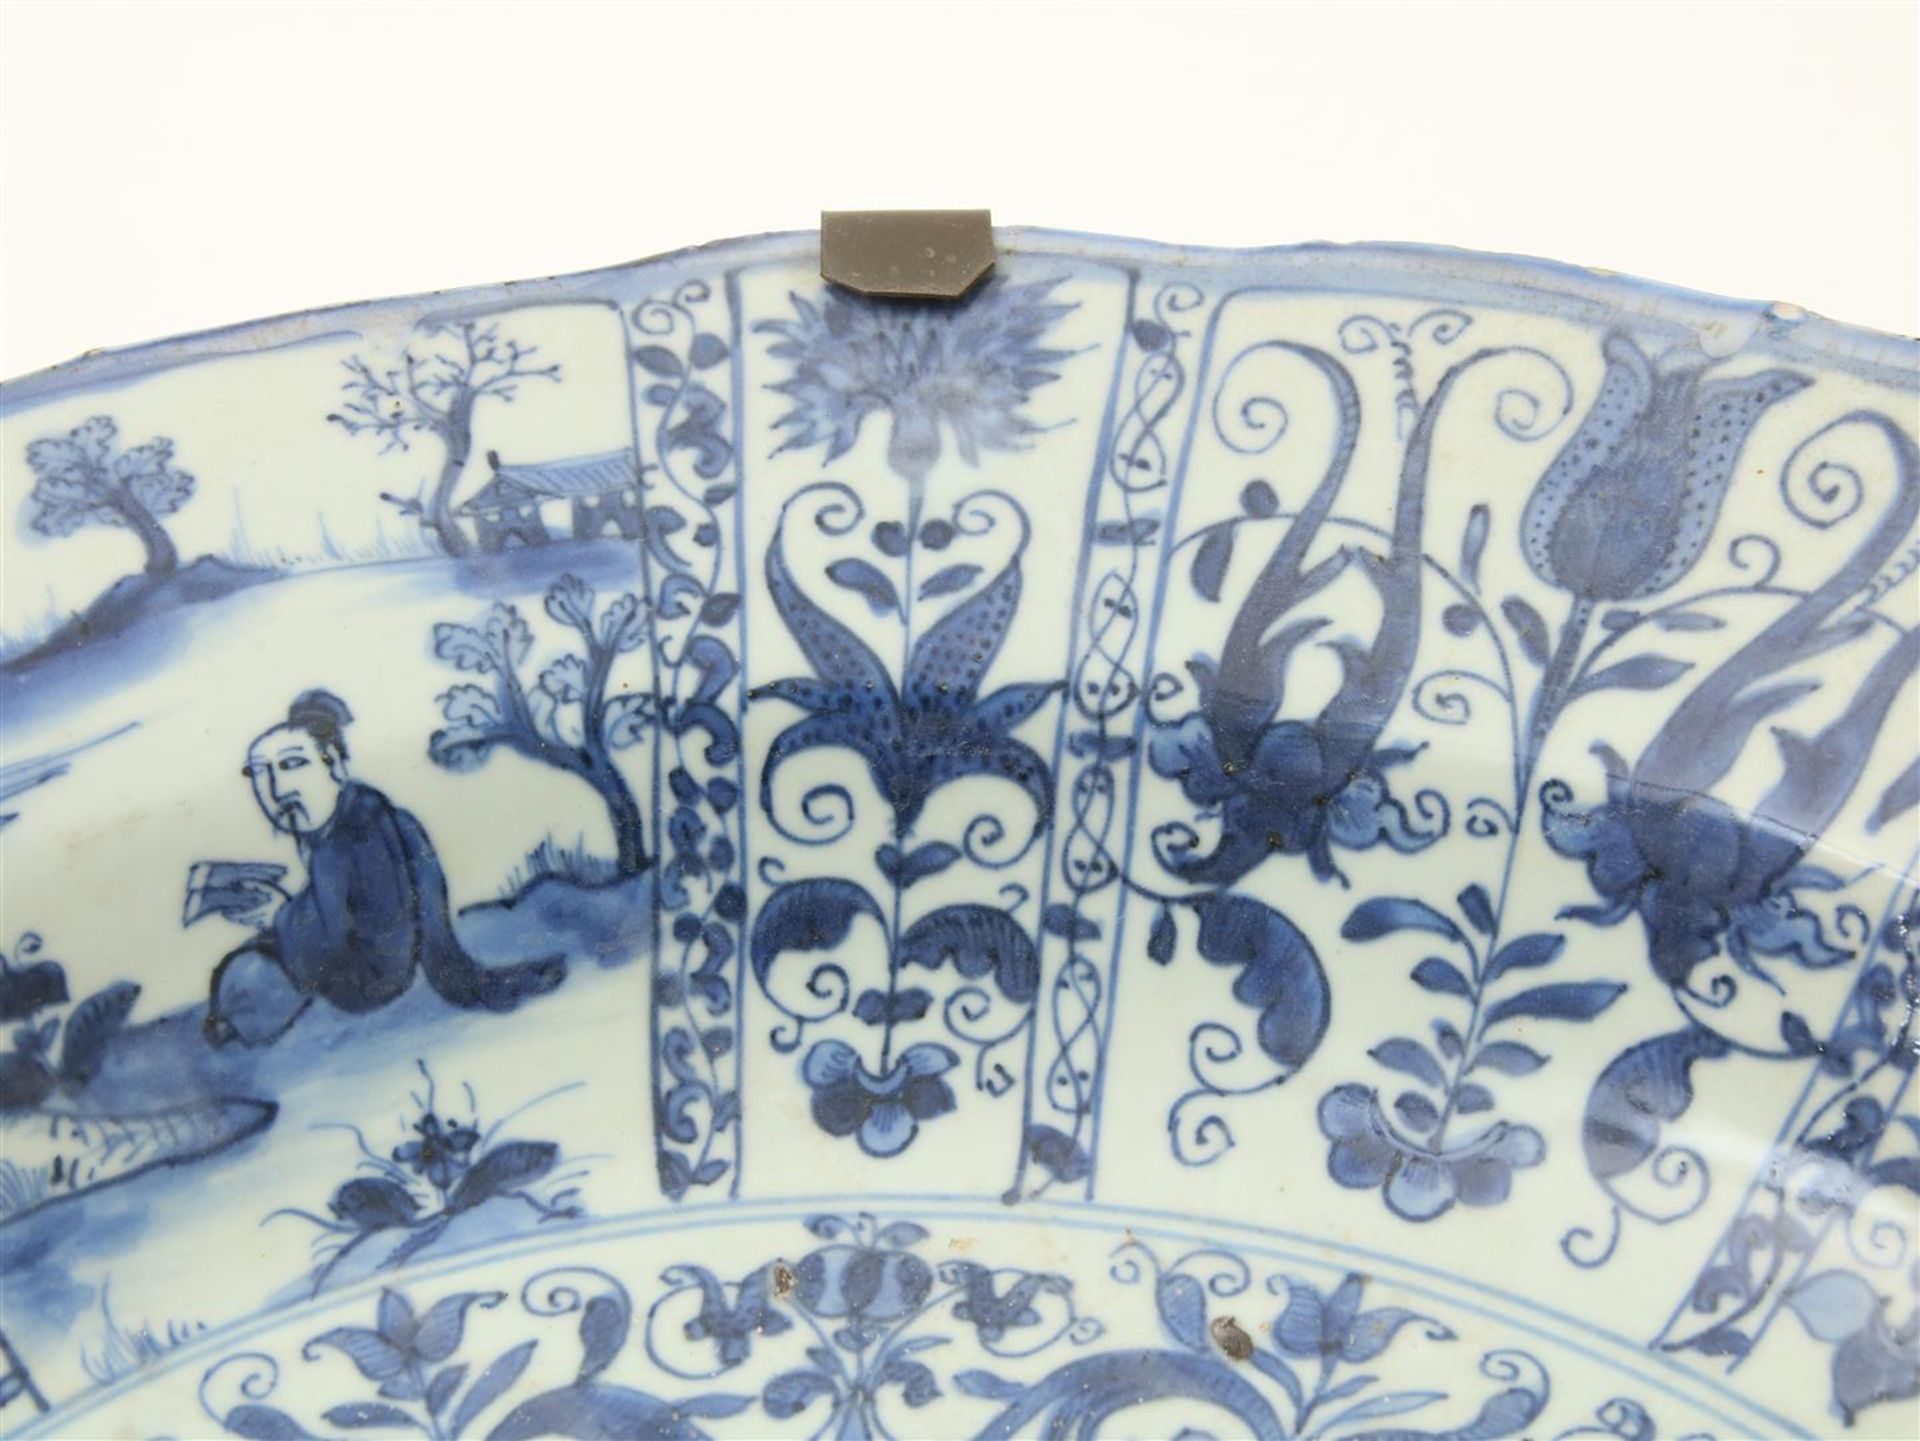 Kraakporcelain plate, China 1635-1650 - Bild 4 aus 10